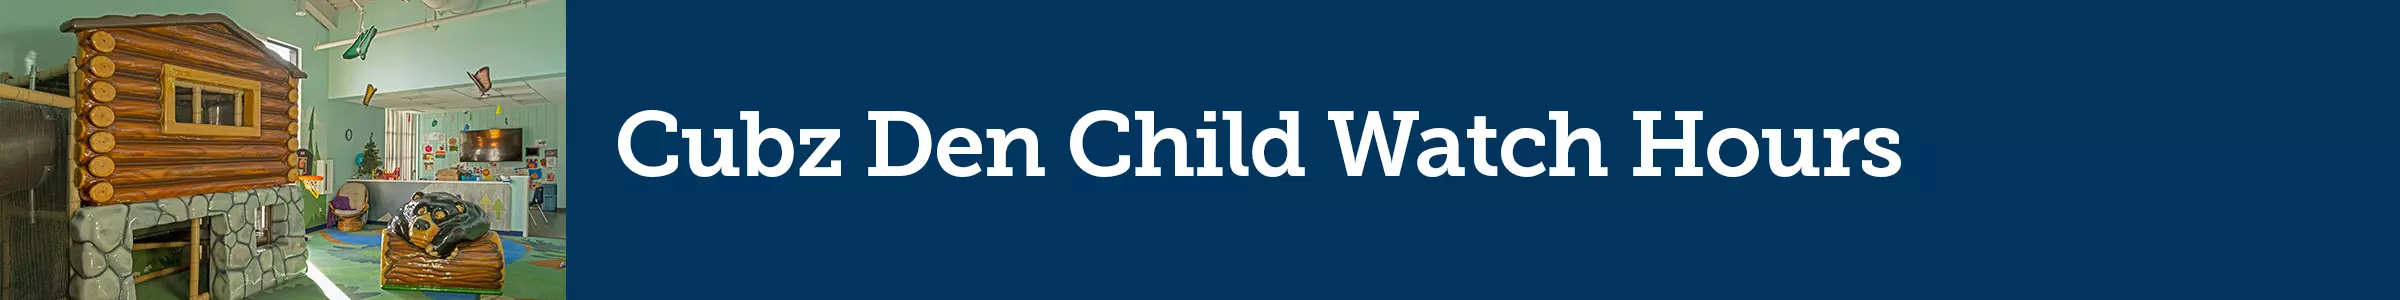 Cubz Den Child Watch Hours